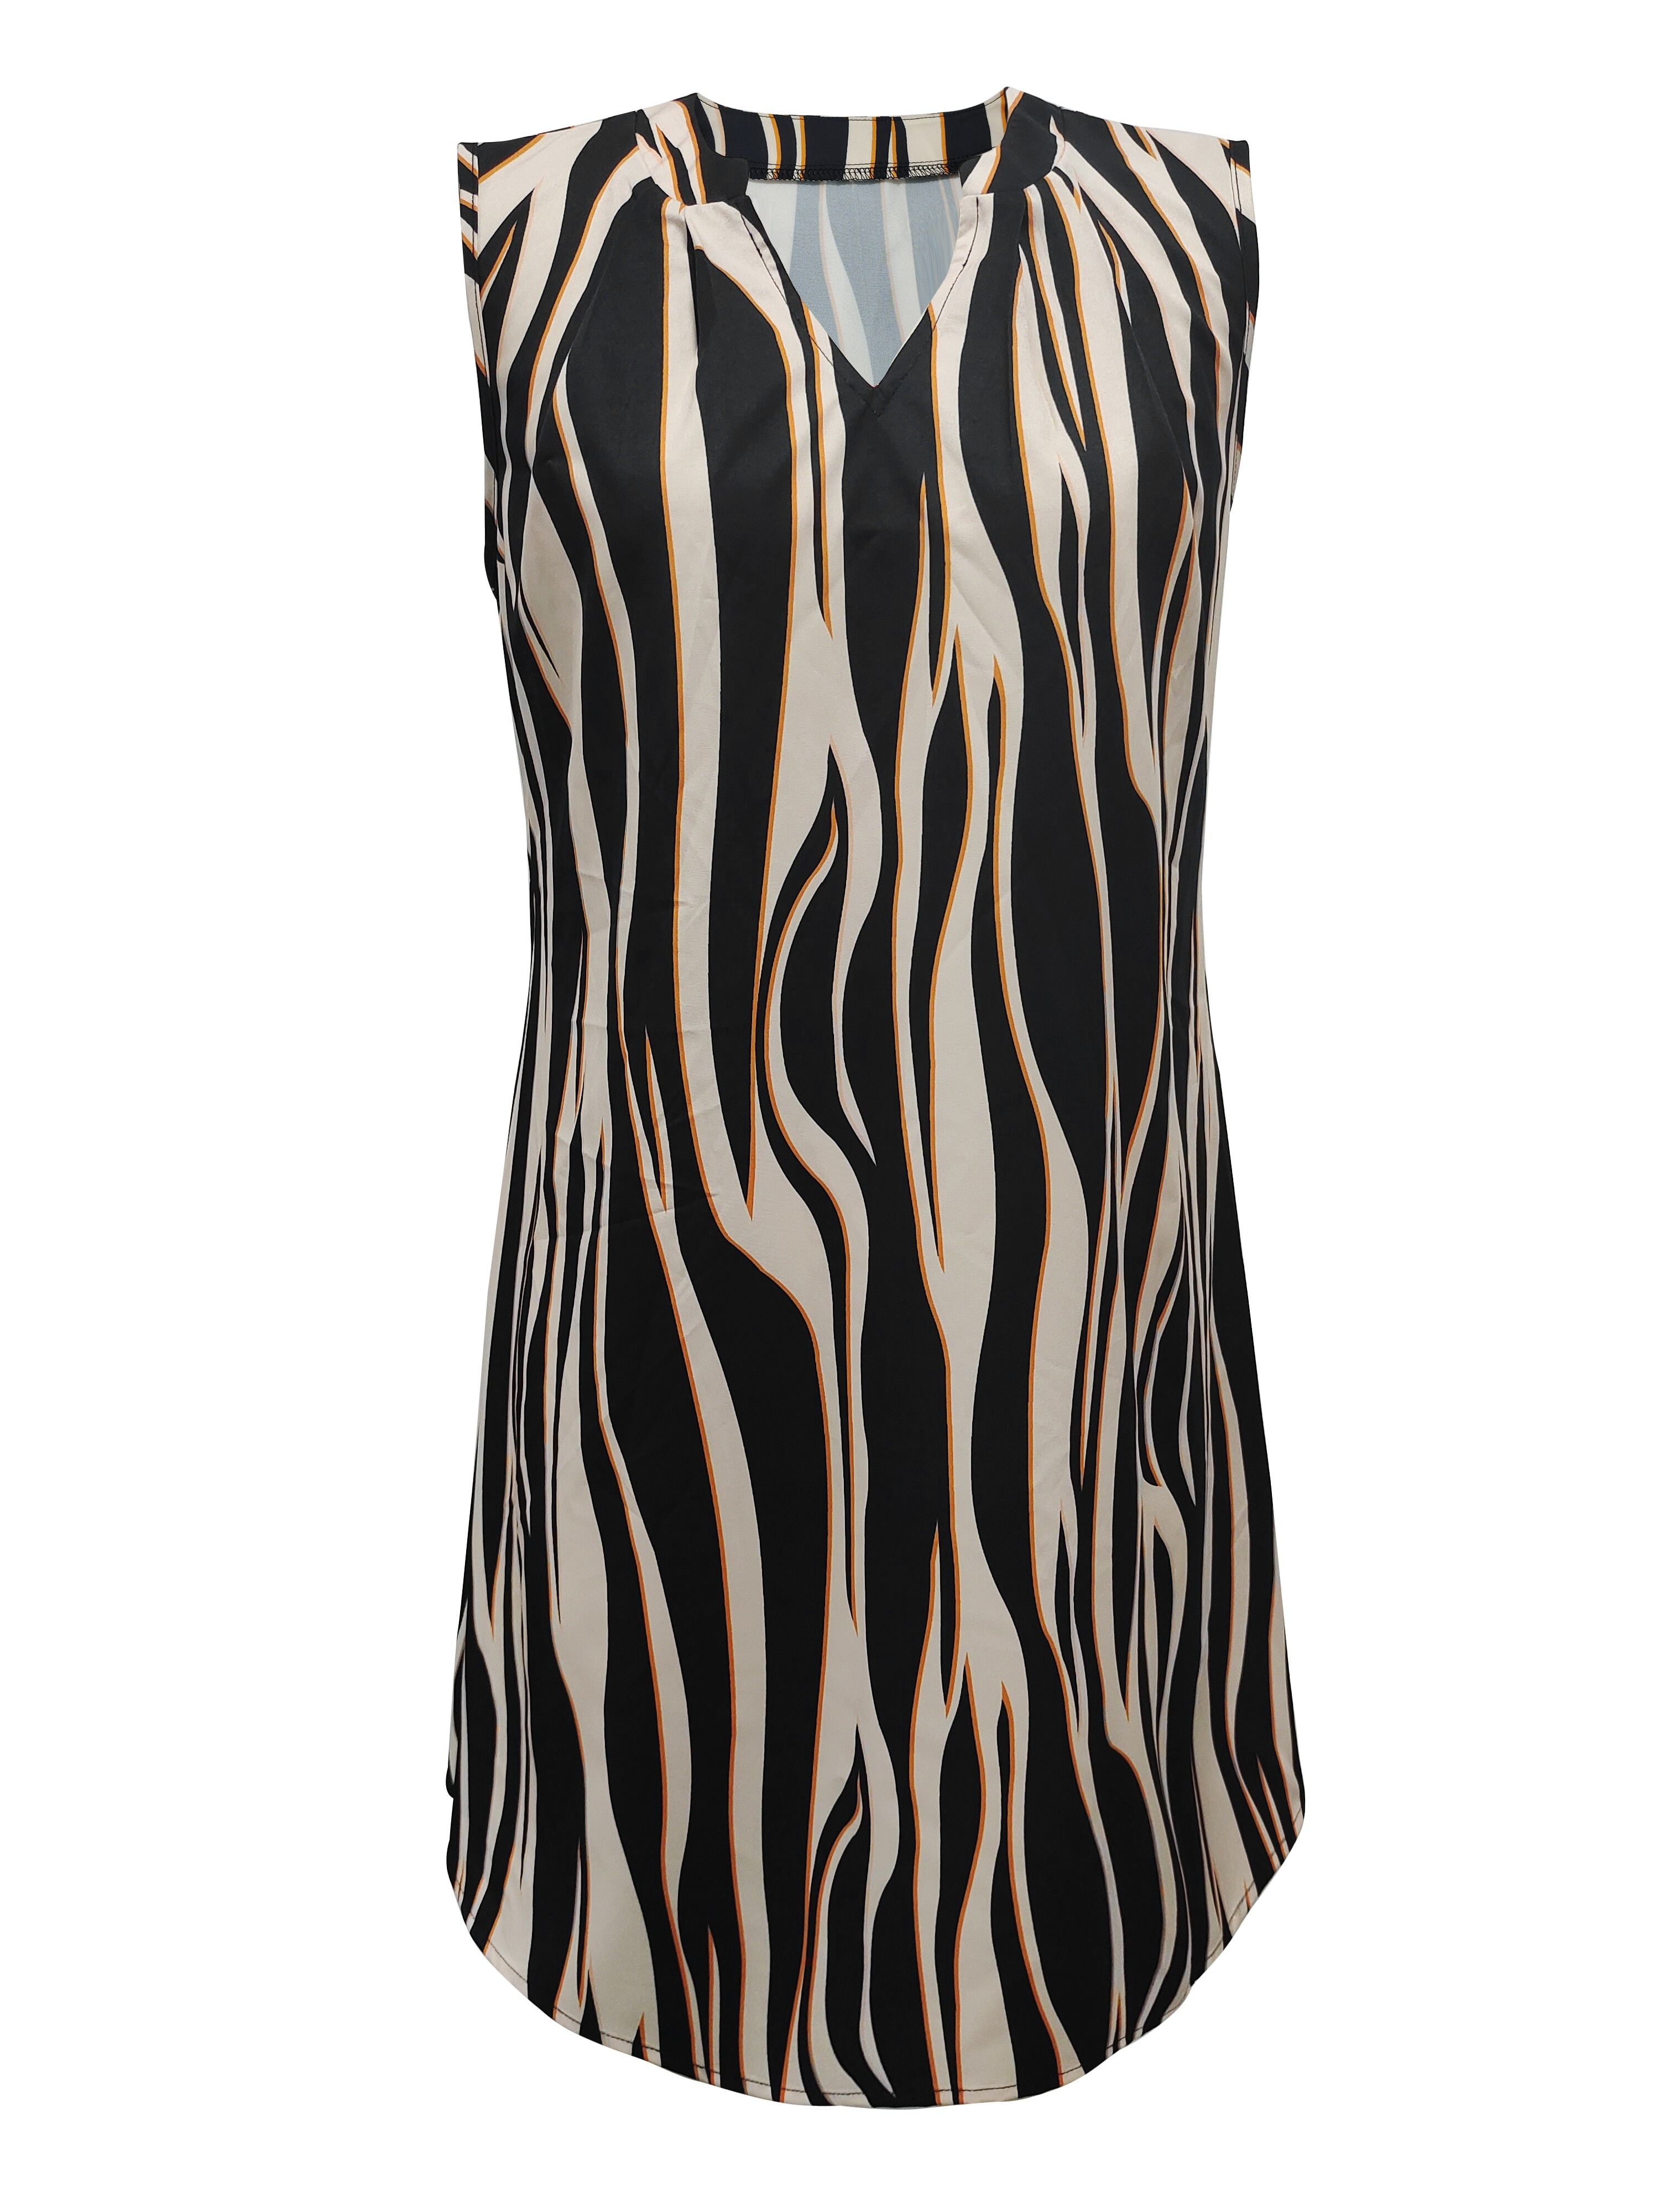 abstract ripple print dress casual v neck sleeveless dress womens clothing details 37